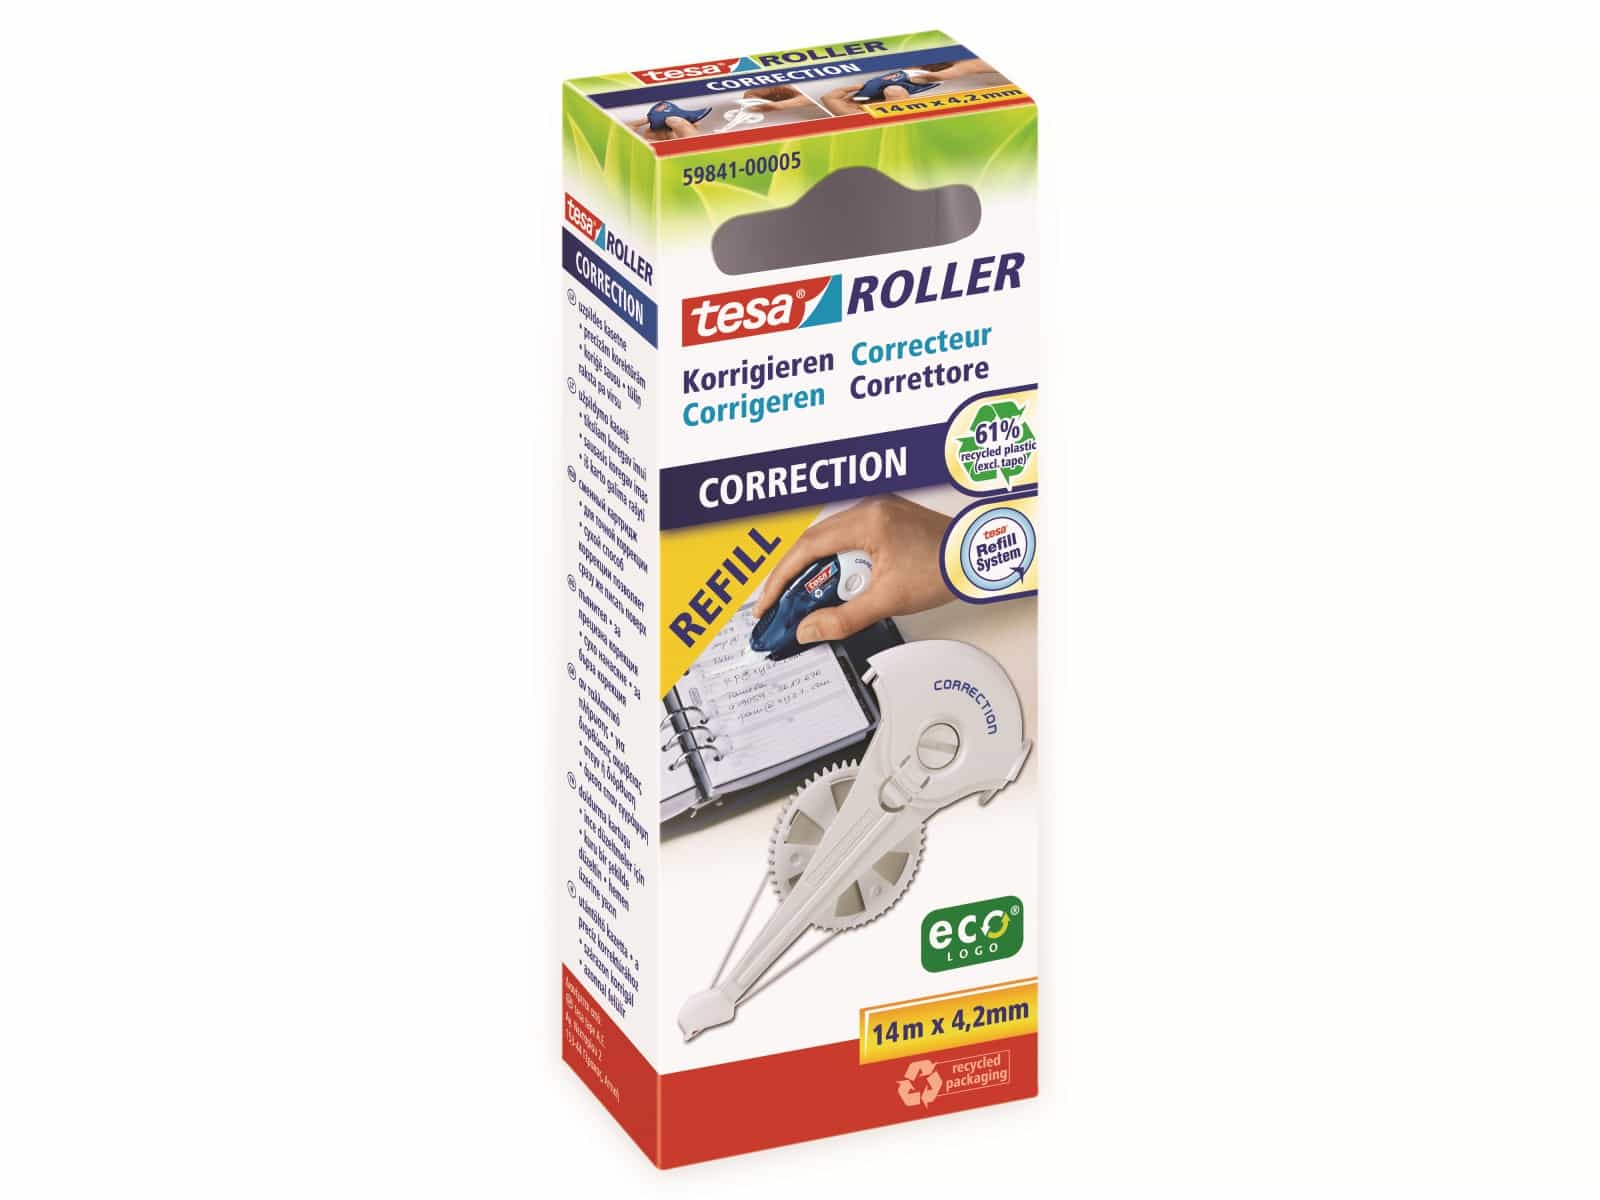 TESA Roller Korrigieren ecoLogo® Nachfüllkassette, 14m:4,2mm, 59841-00005-05